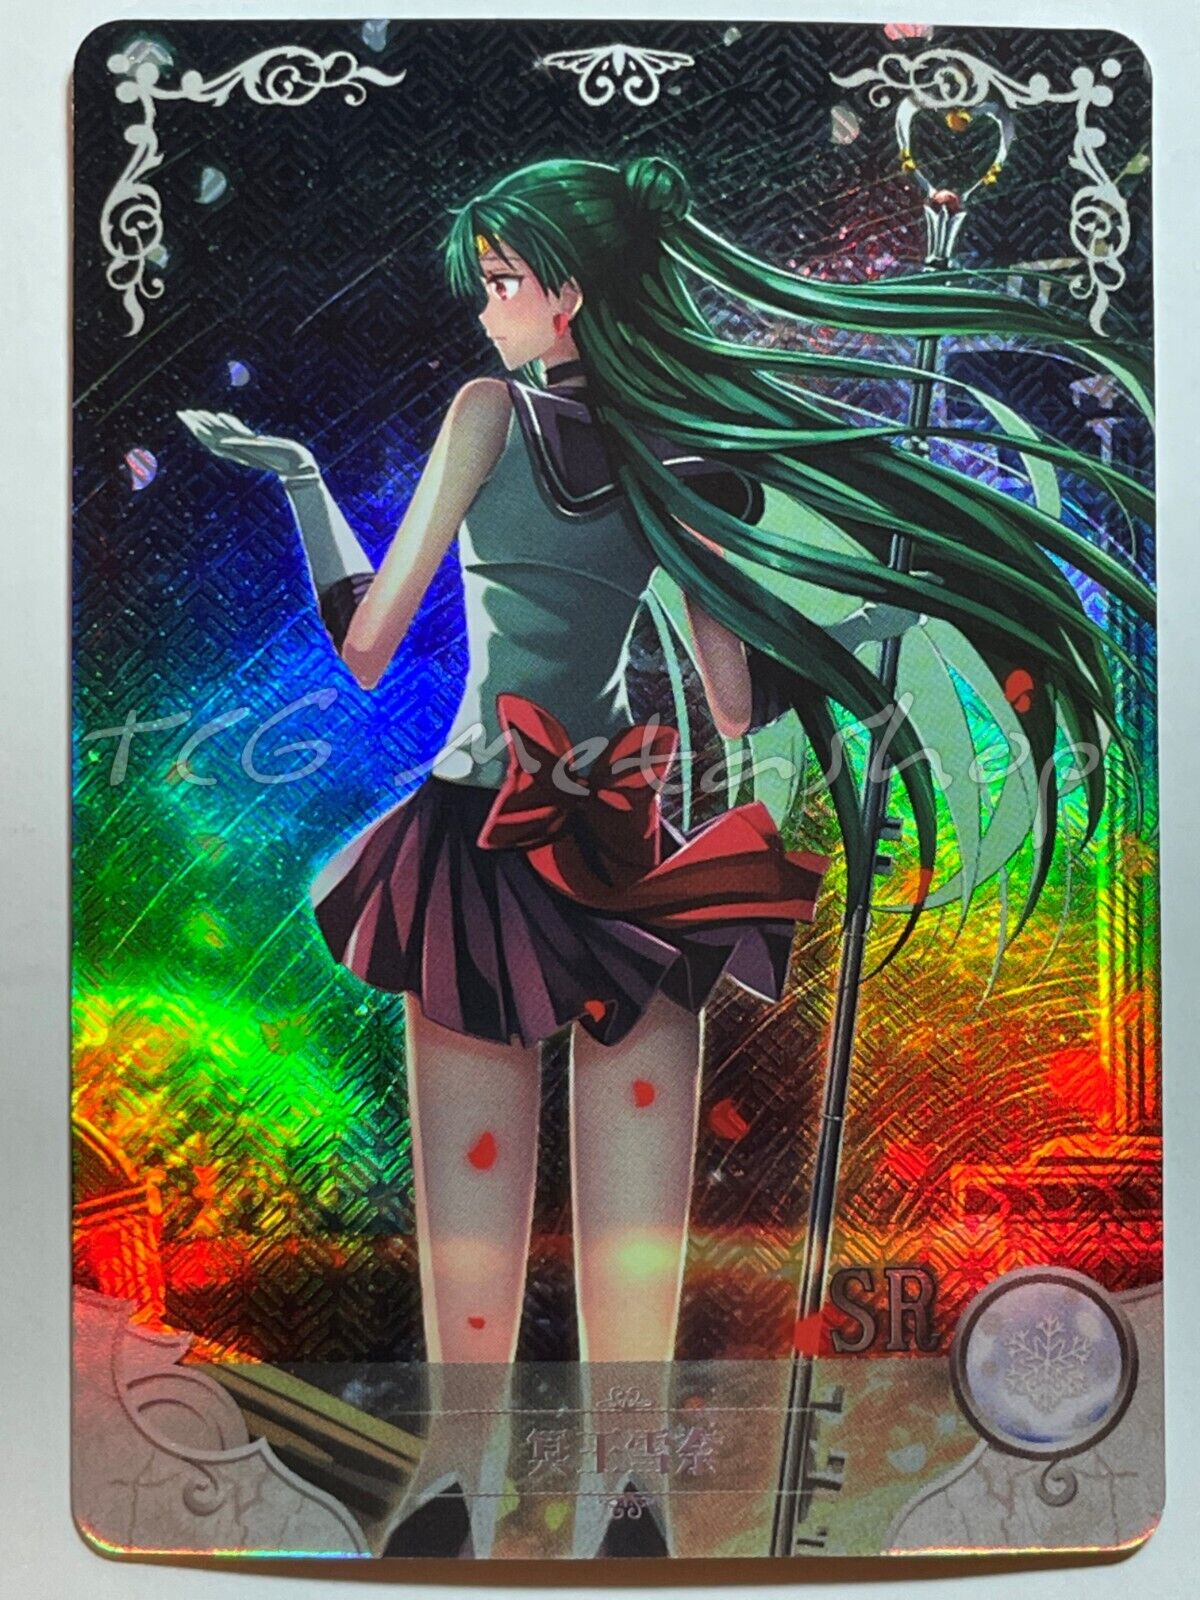 🔥 5m02 [Pick Your Singles] Goddess Story Waifu Anime Doujin Cards 🔥